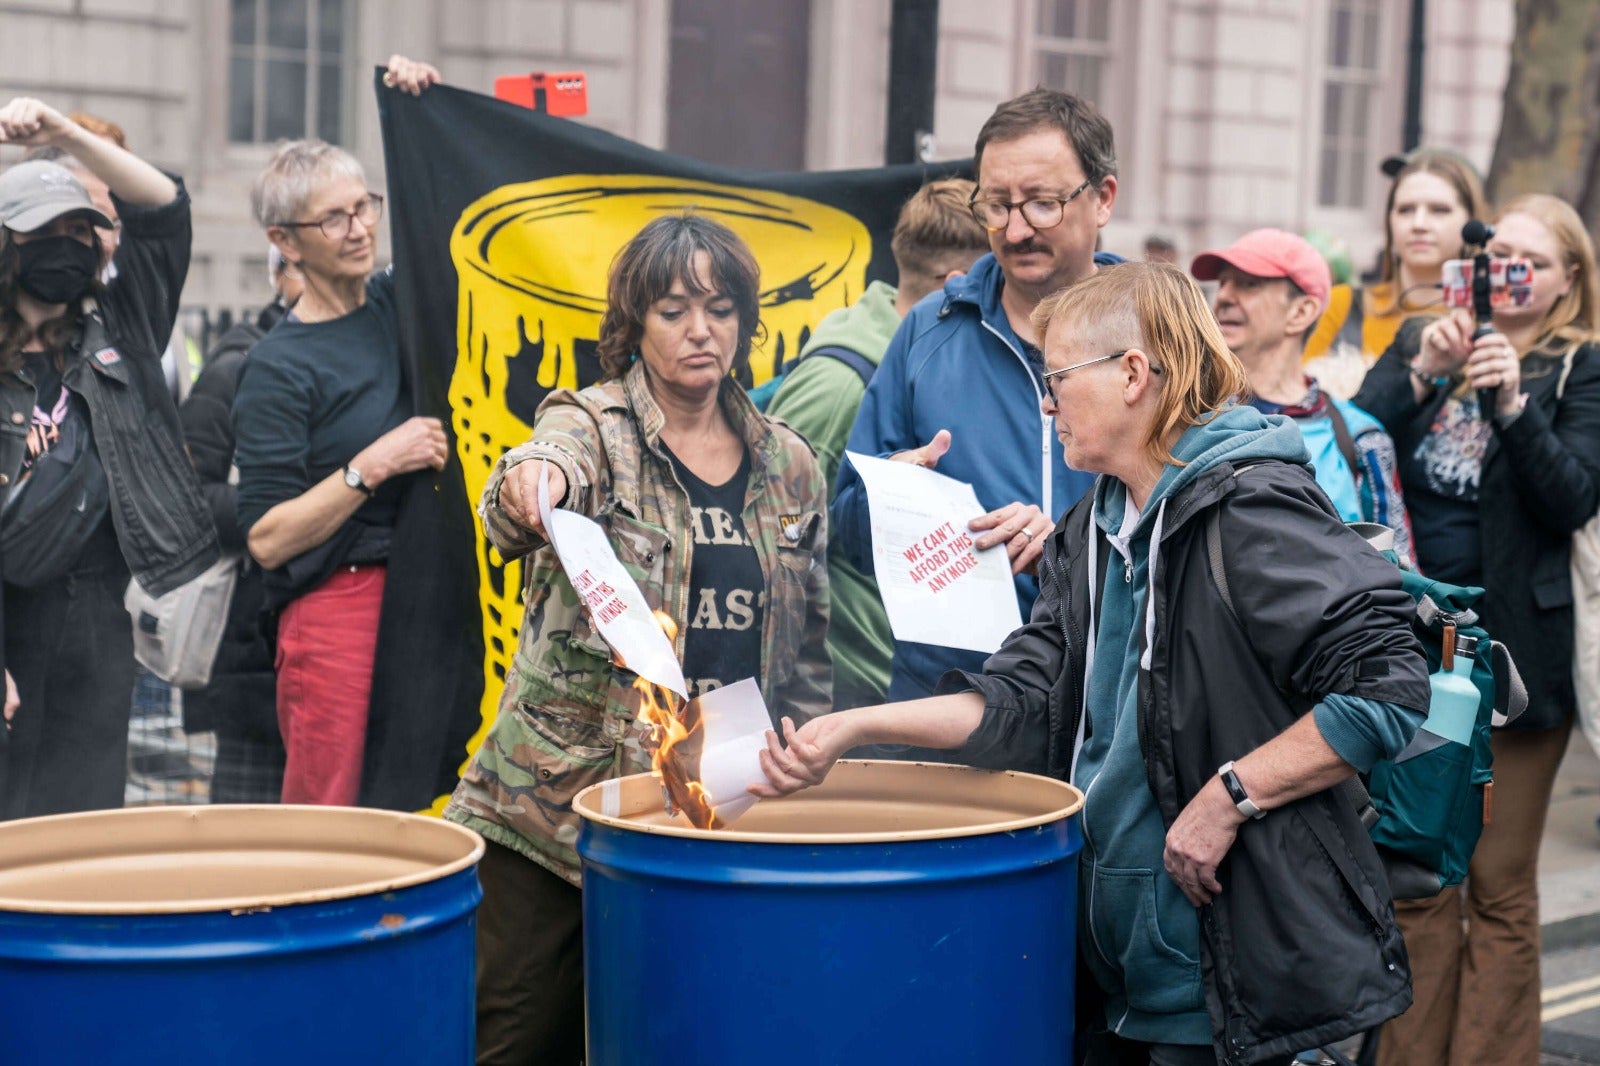 Extinction rebellion activists burn energy bills in Downing Street protest